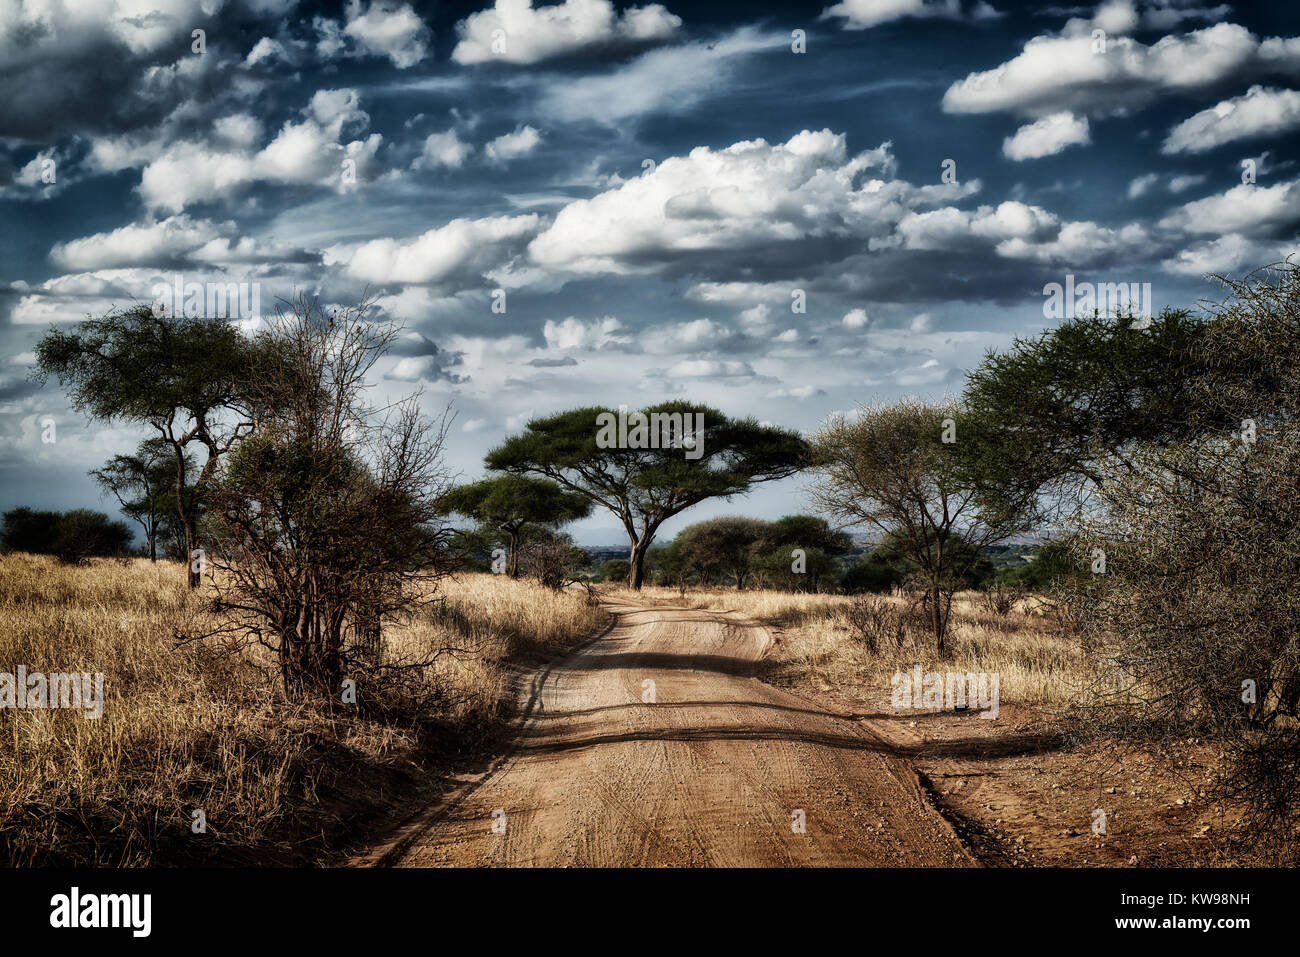 typical landscape in Tarangire National Park, Tanzania, Africa Stock Photo